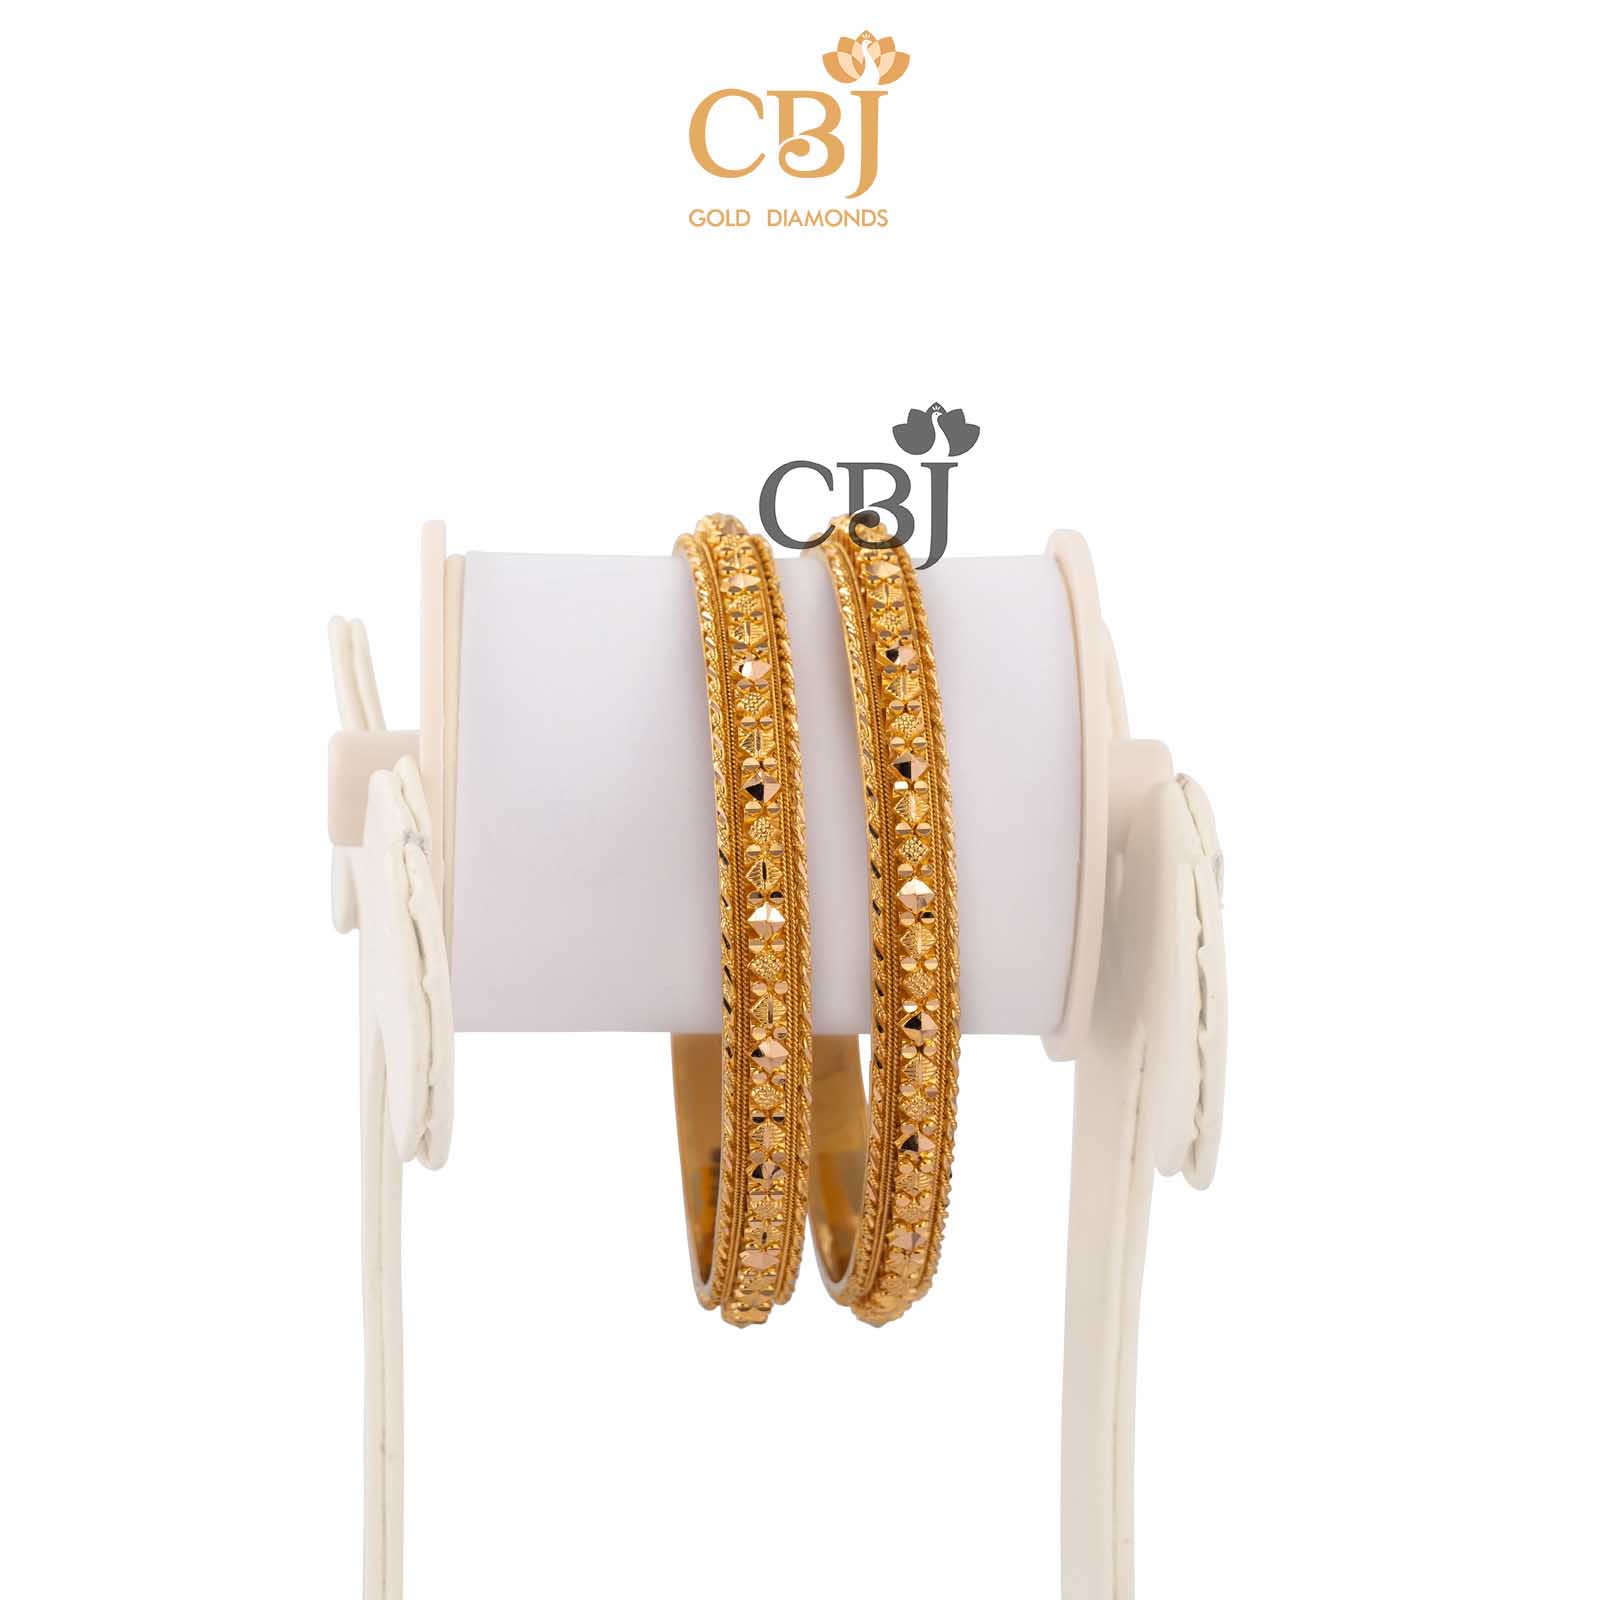 Gold Rope Chain Bracelet | Astrid & Miyu Bracelets